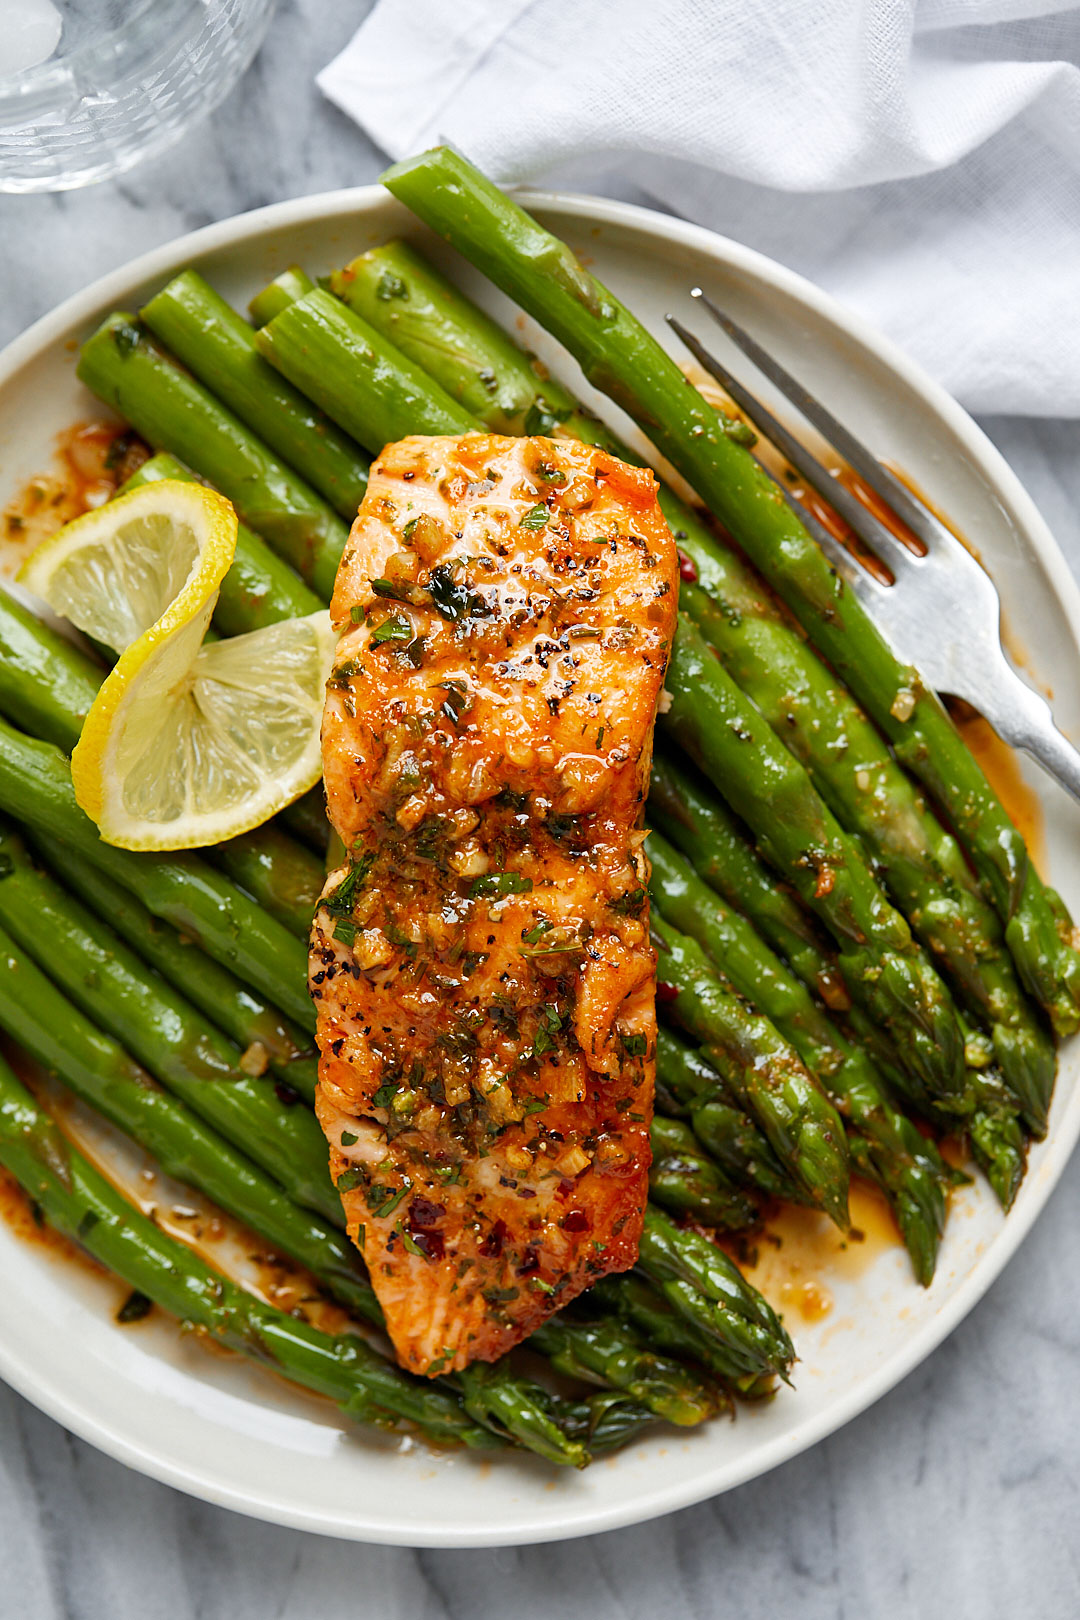 https://www.eatwell101.com/wp-content/uploads/2019/06/salmon-asparagus-recipe-3.jpg